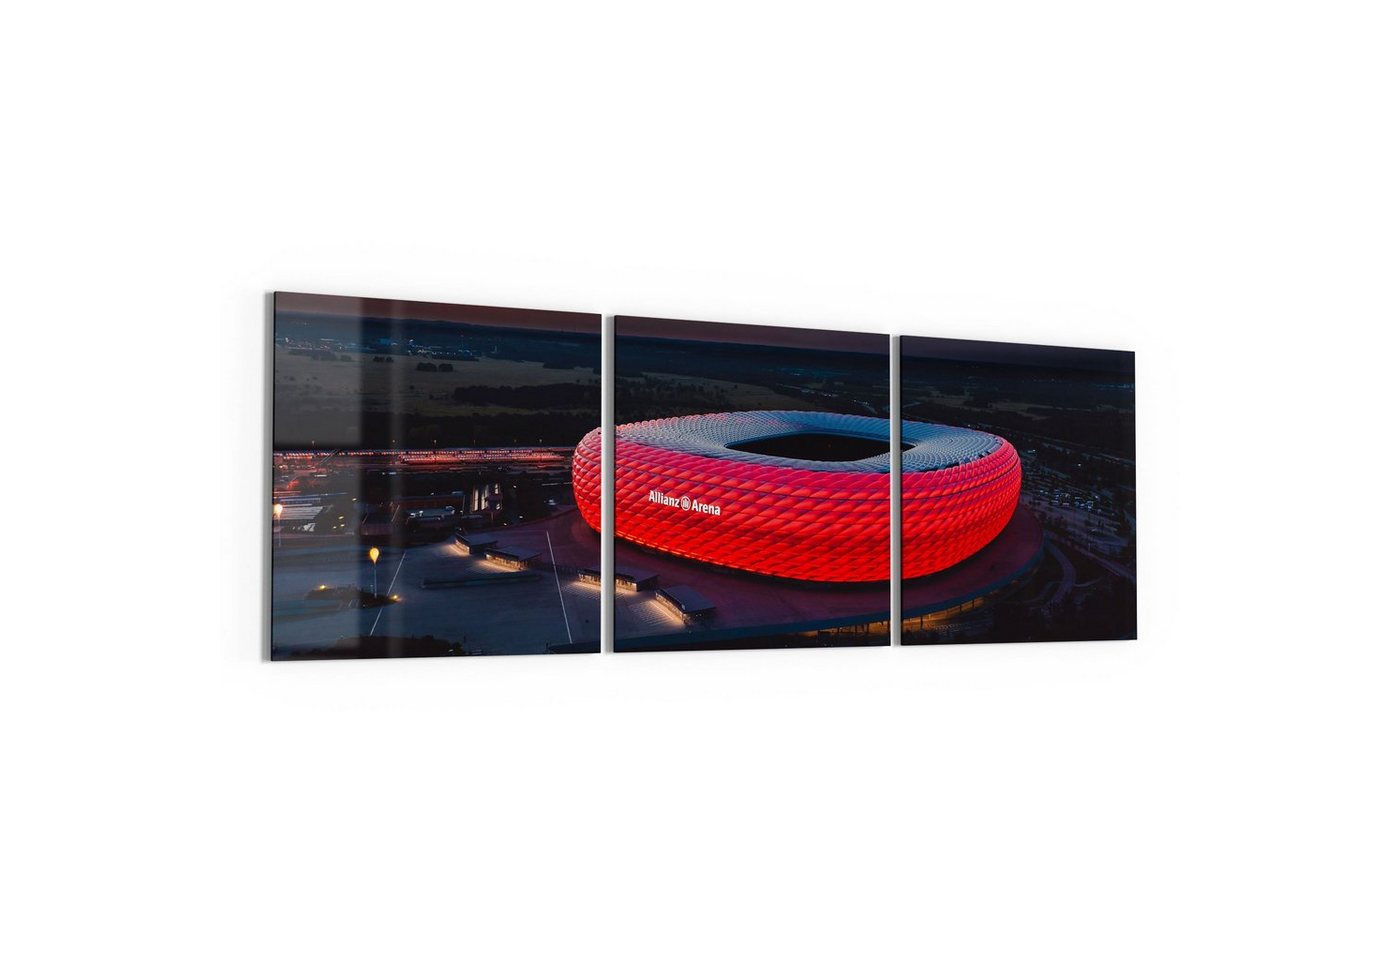 DEQORI Glasbild 'Allianz Arena, München', 'Allianz Arena, München', Glas Wandbild Bild schwebend modern von DEQORI